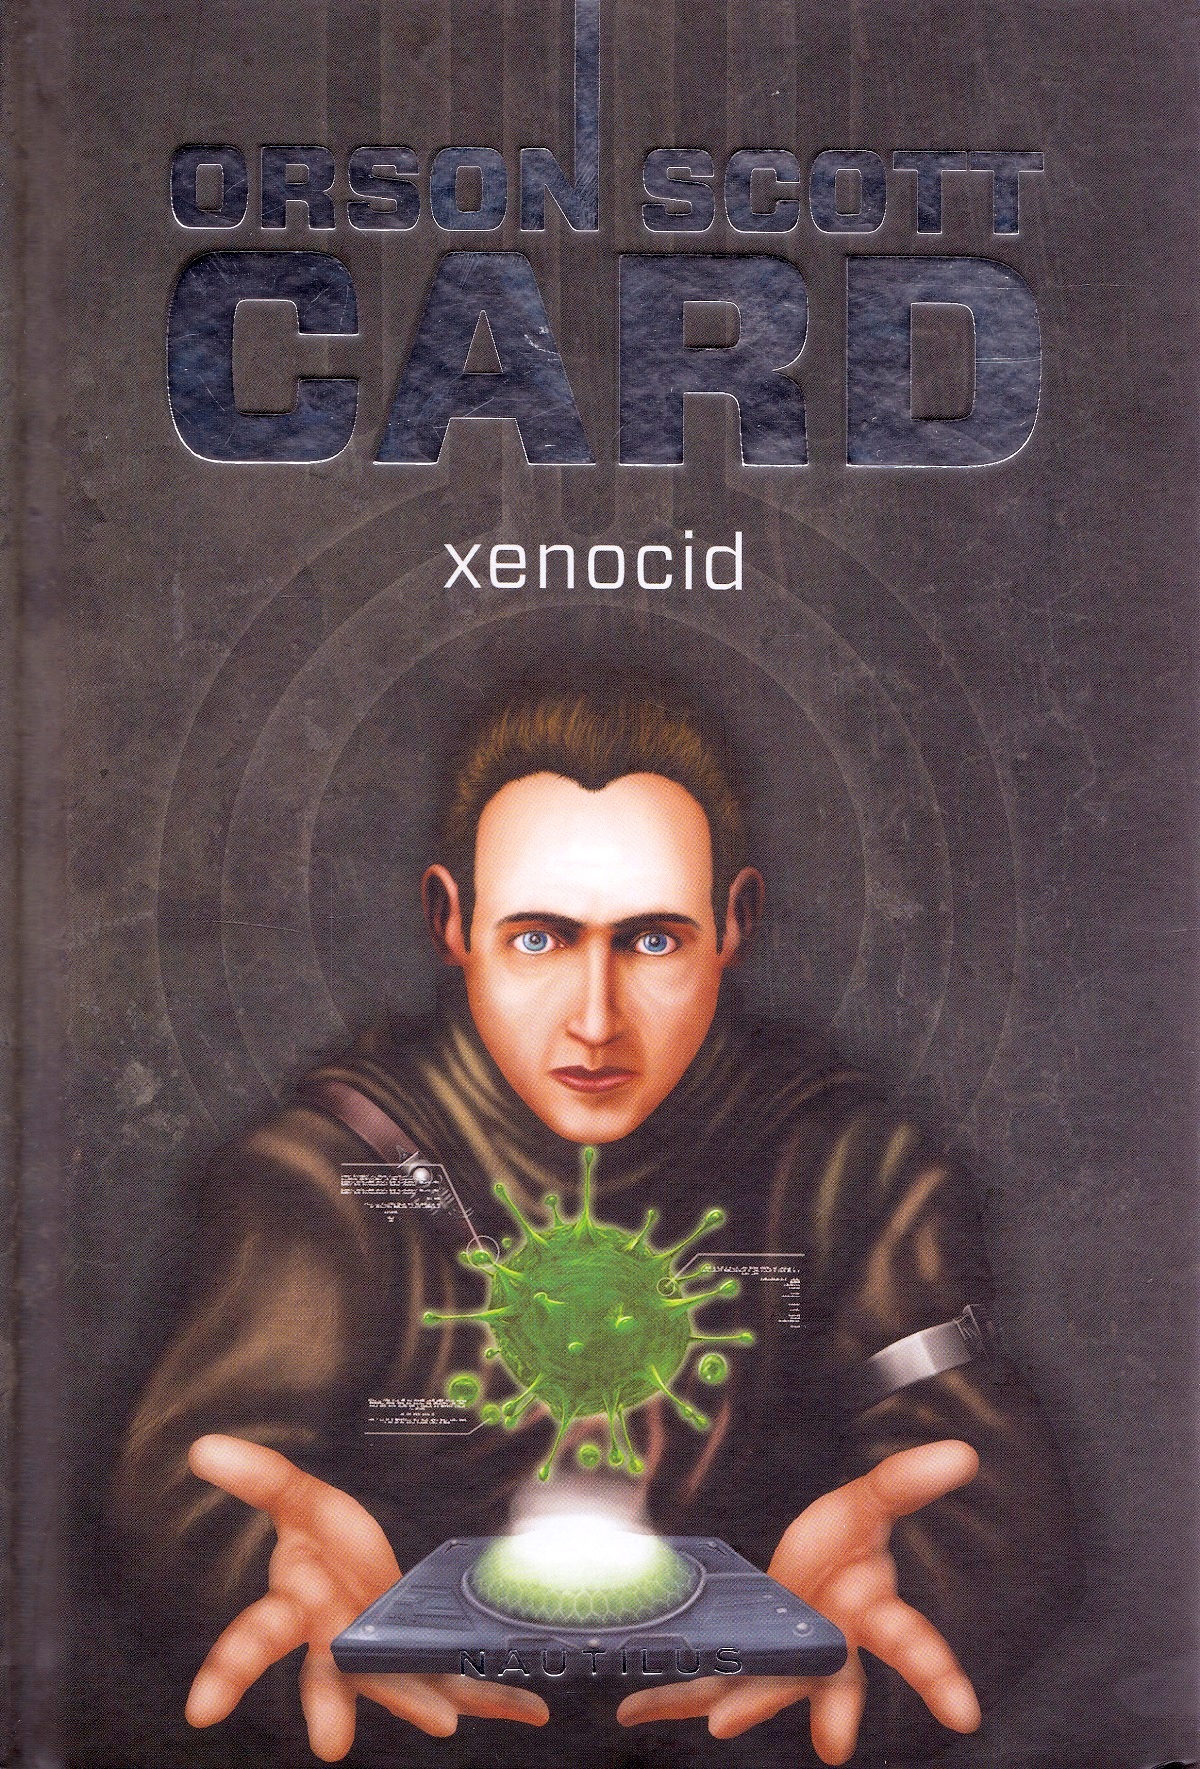 Xenocid  - Orson Scott Card